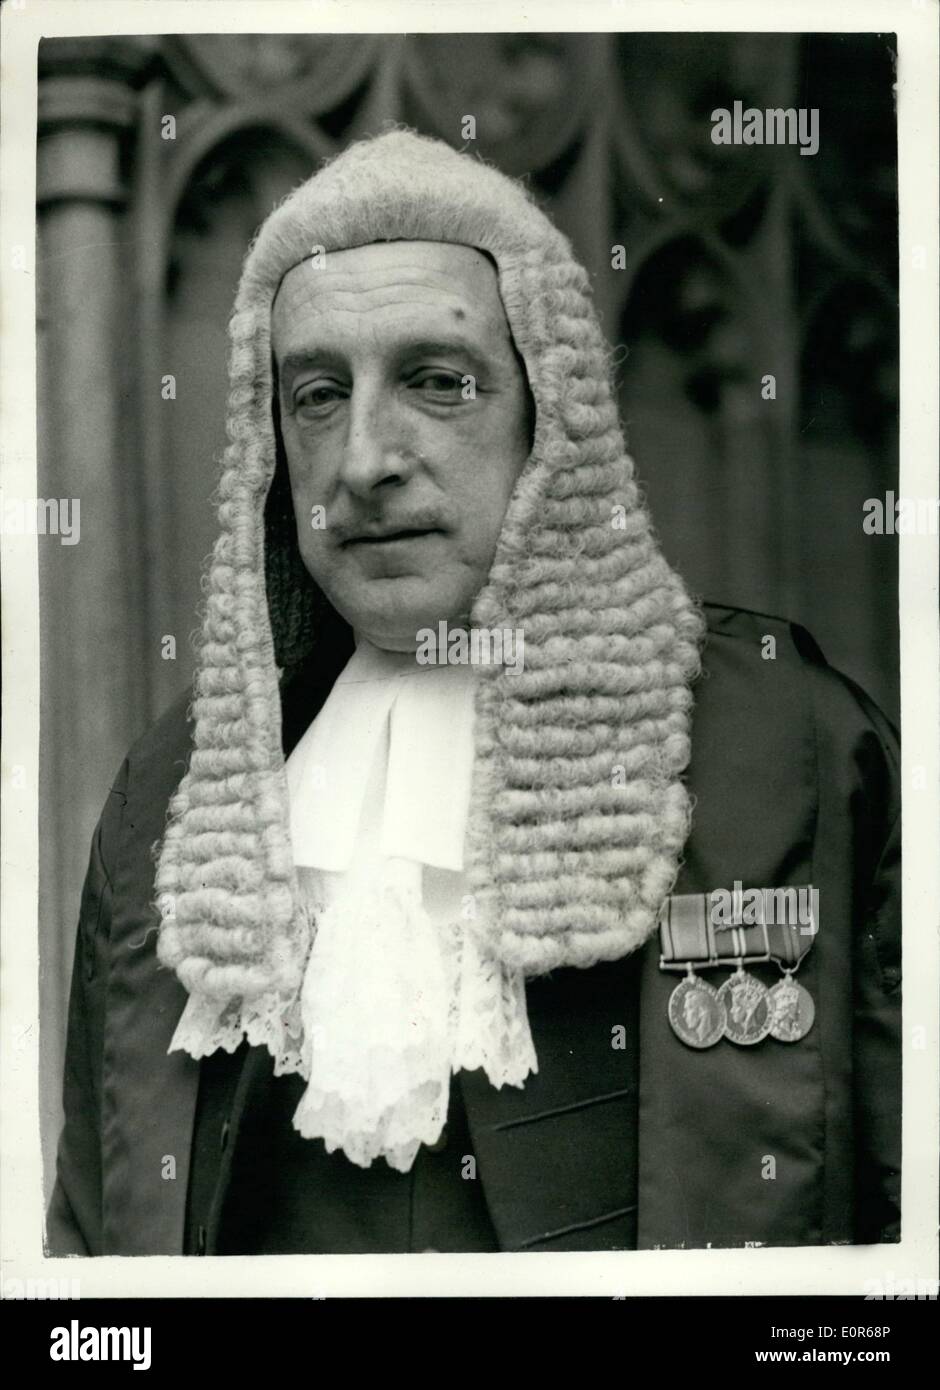 4. April 1958 - neue QC geschworen - In im House Of Lords. Arthur James Irvine. Foto zeigt: - Herr Arthur James Irvine kommt an das House Of Lords für Vereidigung - Zeremonie heute Morgen. Stockfoto